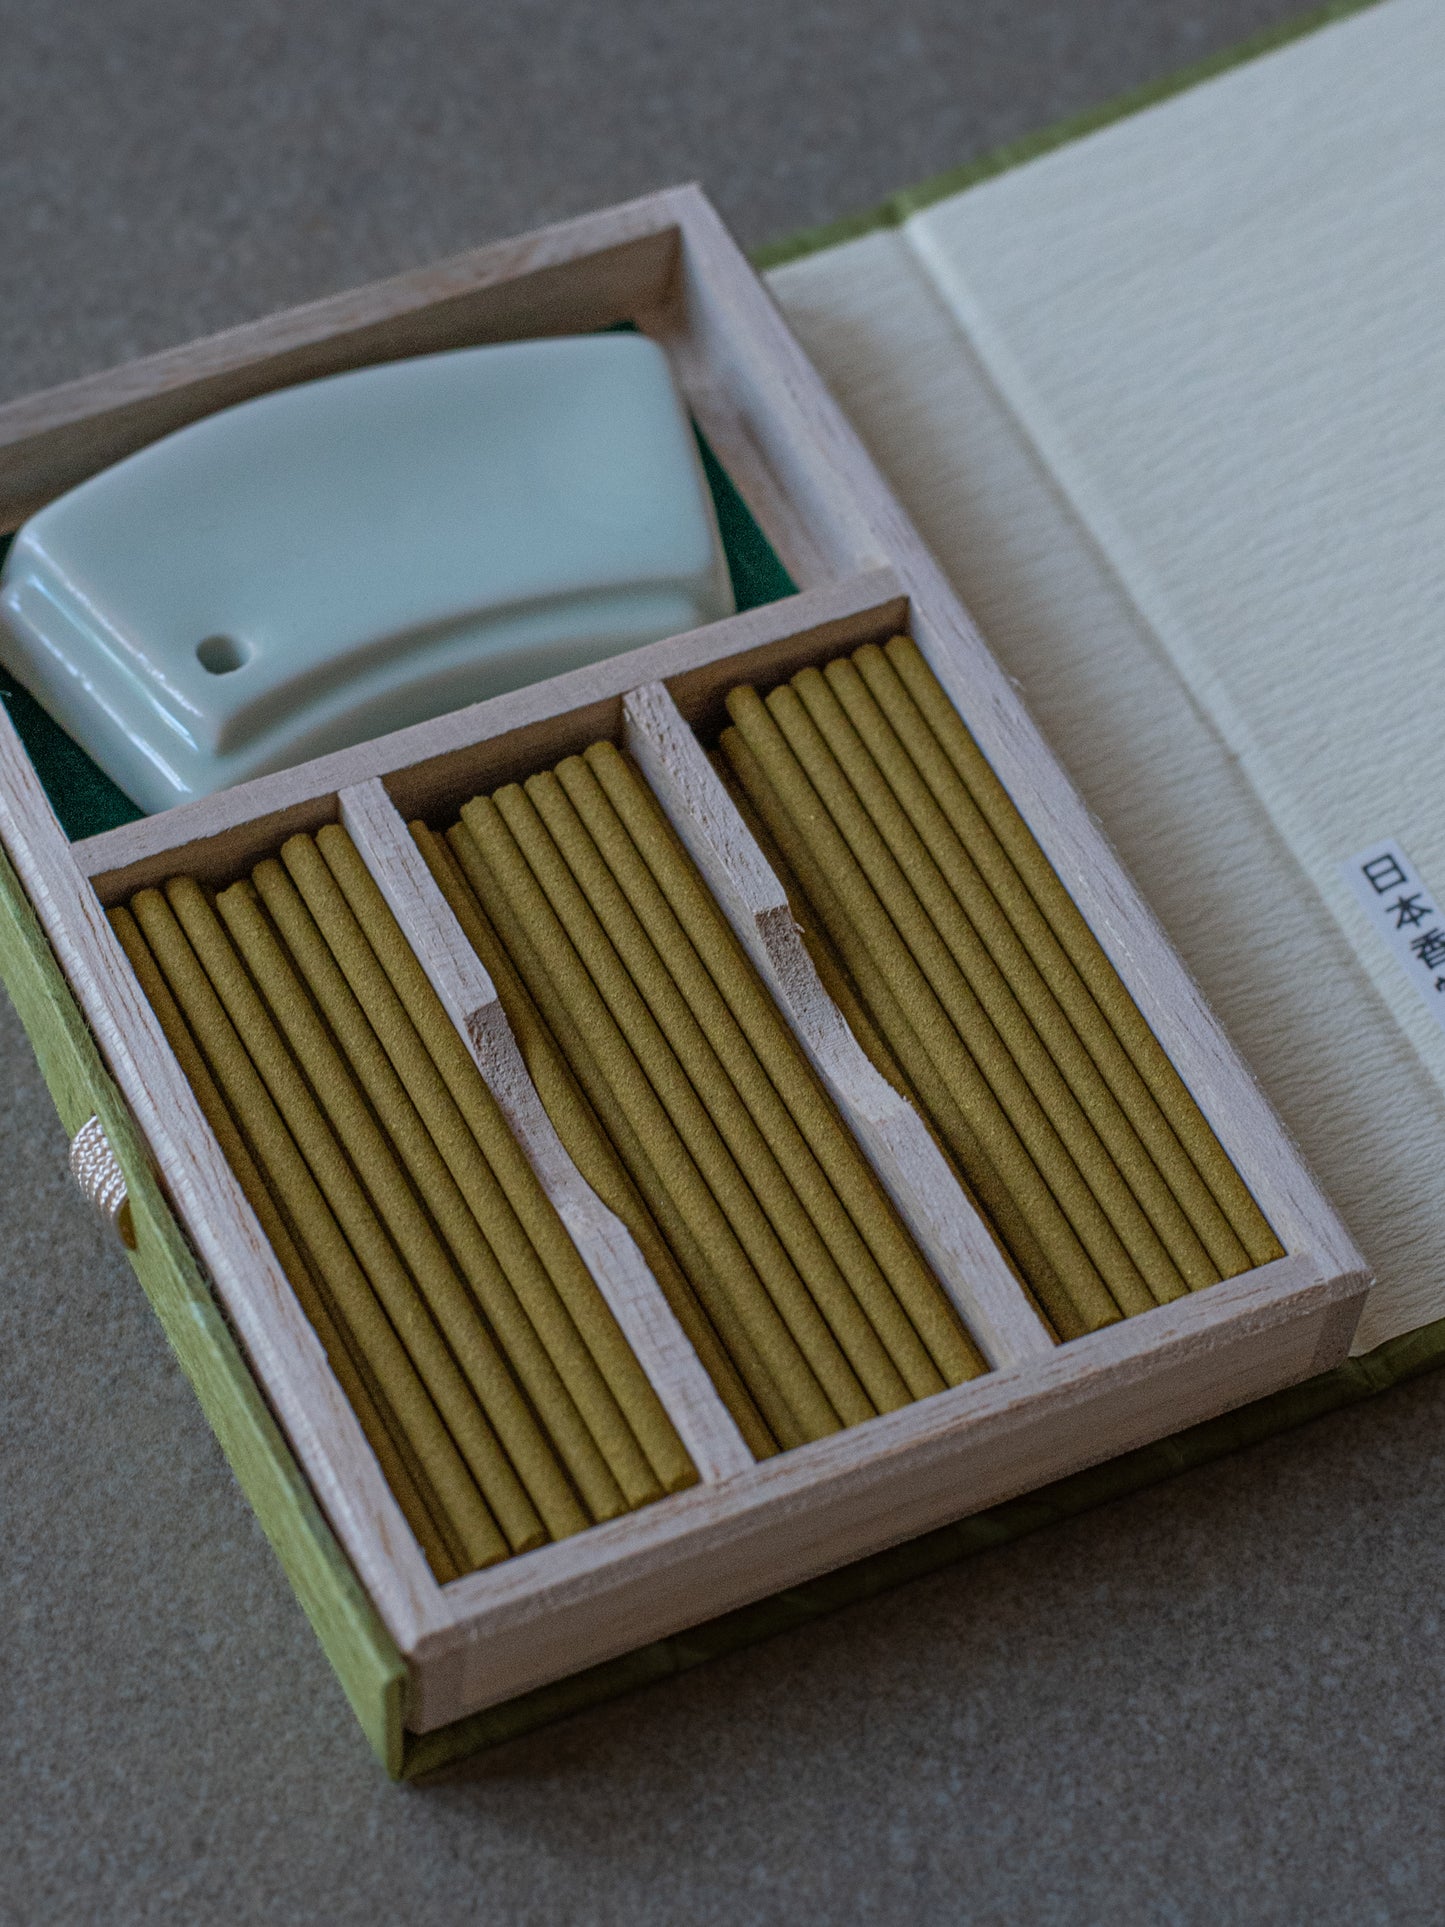 Mainichi Byakudan Incense Sticks Gift Set (60 sticks)